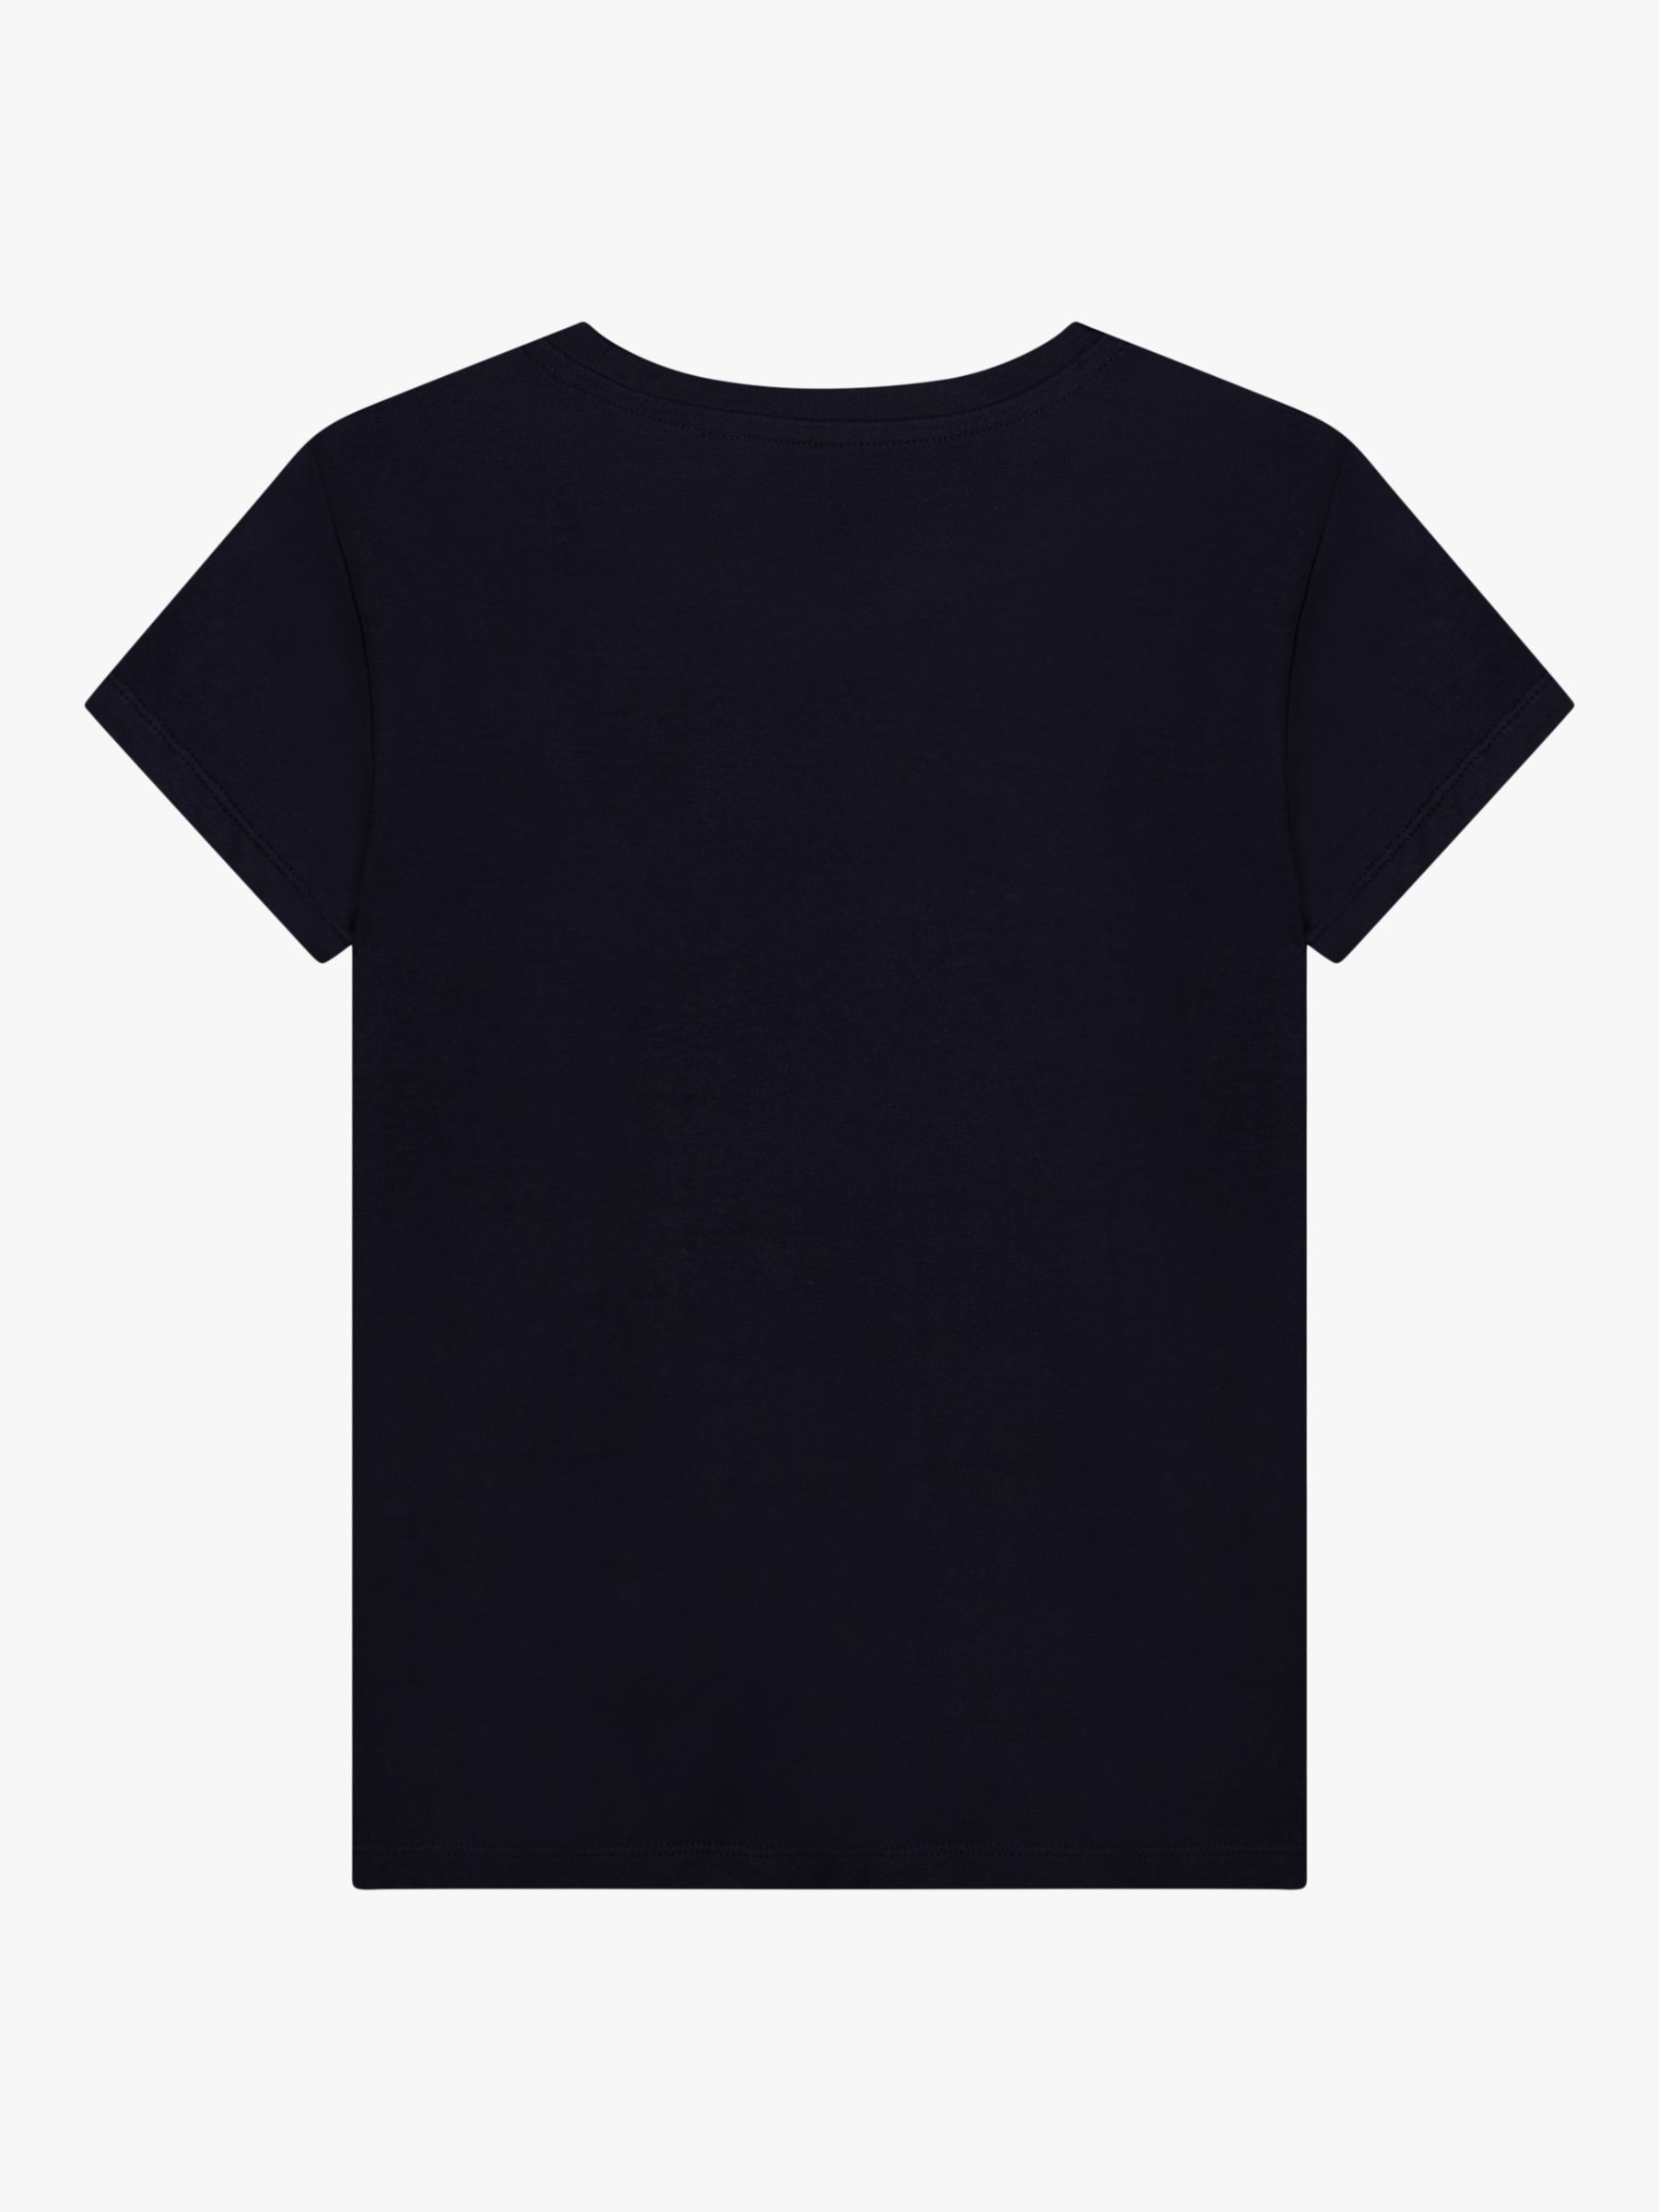 Aigle Kids' Logo Print T-Shirt, Dark Blue, 4 years